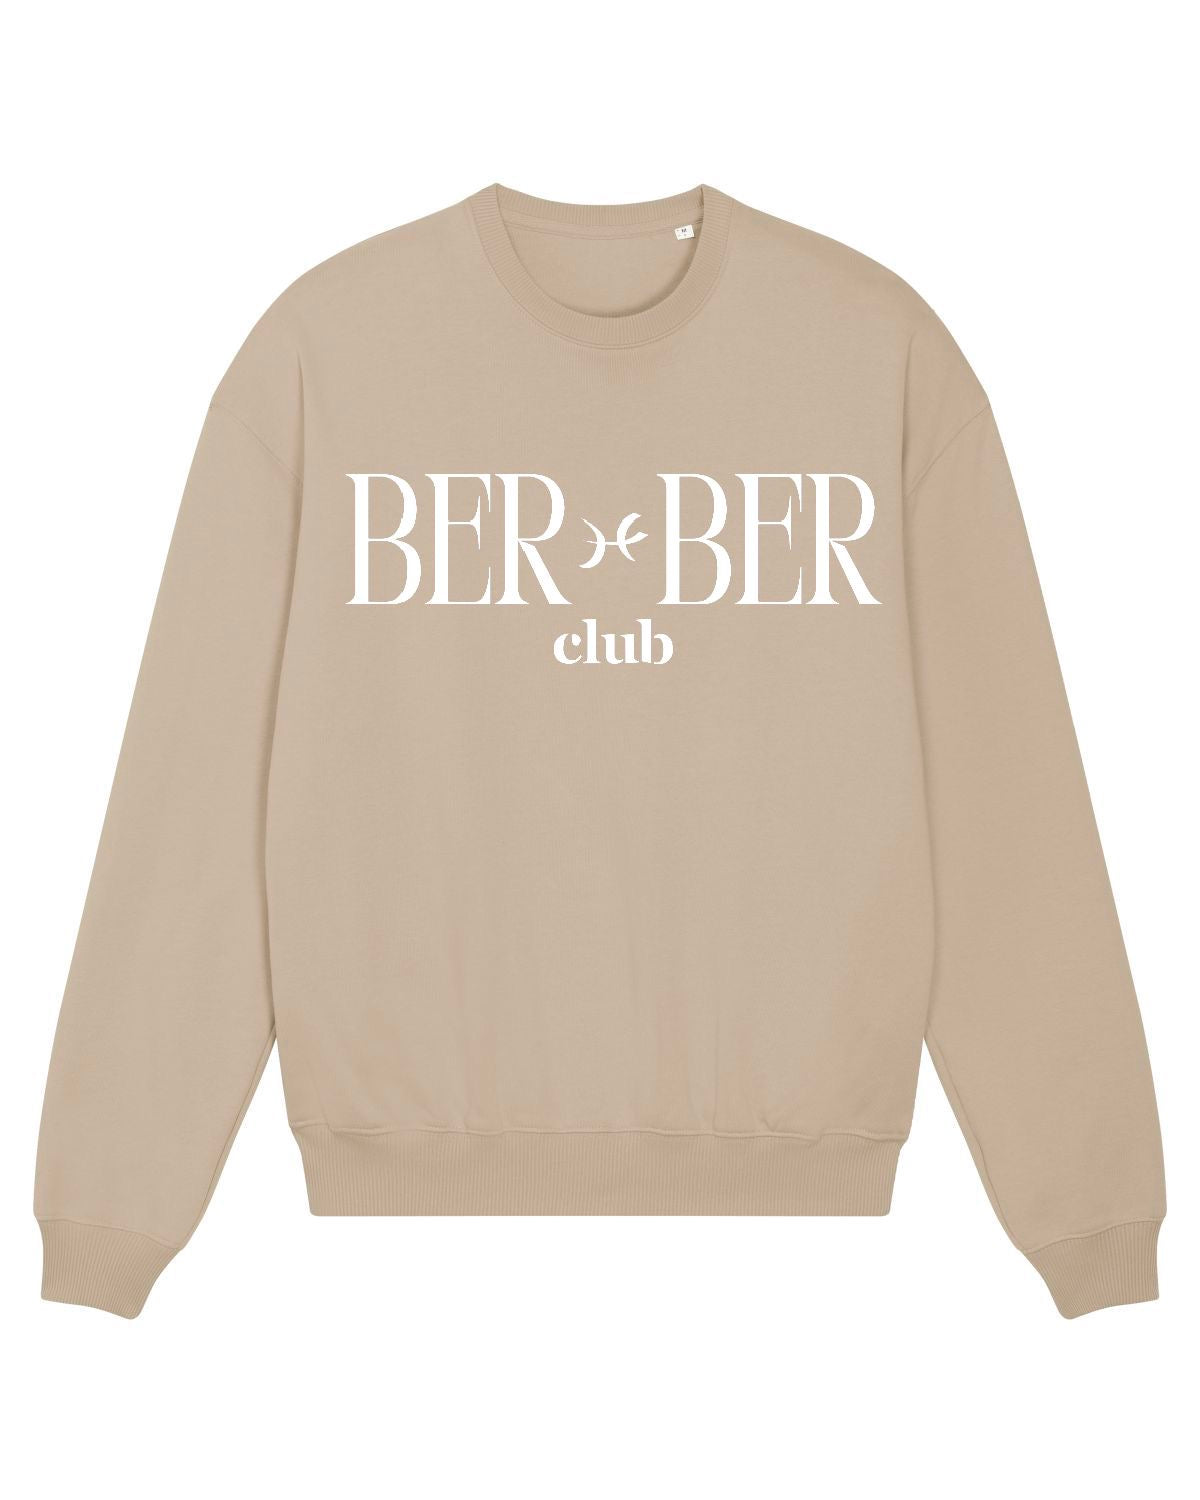 Pull oversize « Berber Club » - Ghazel Boutique